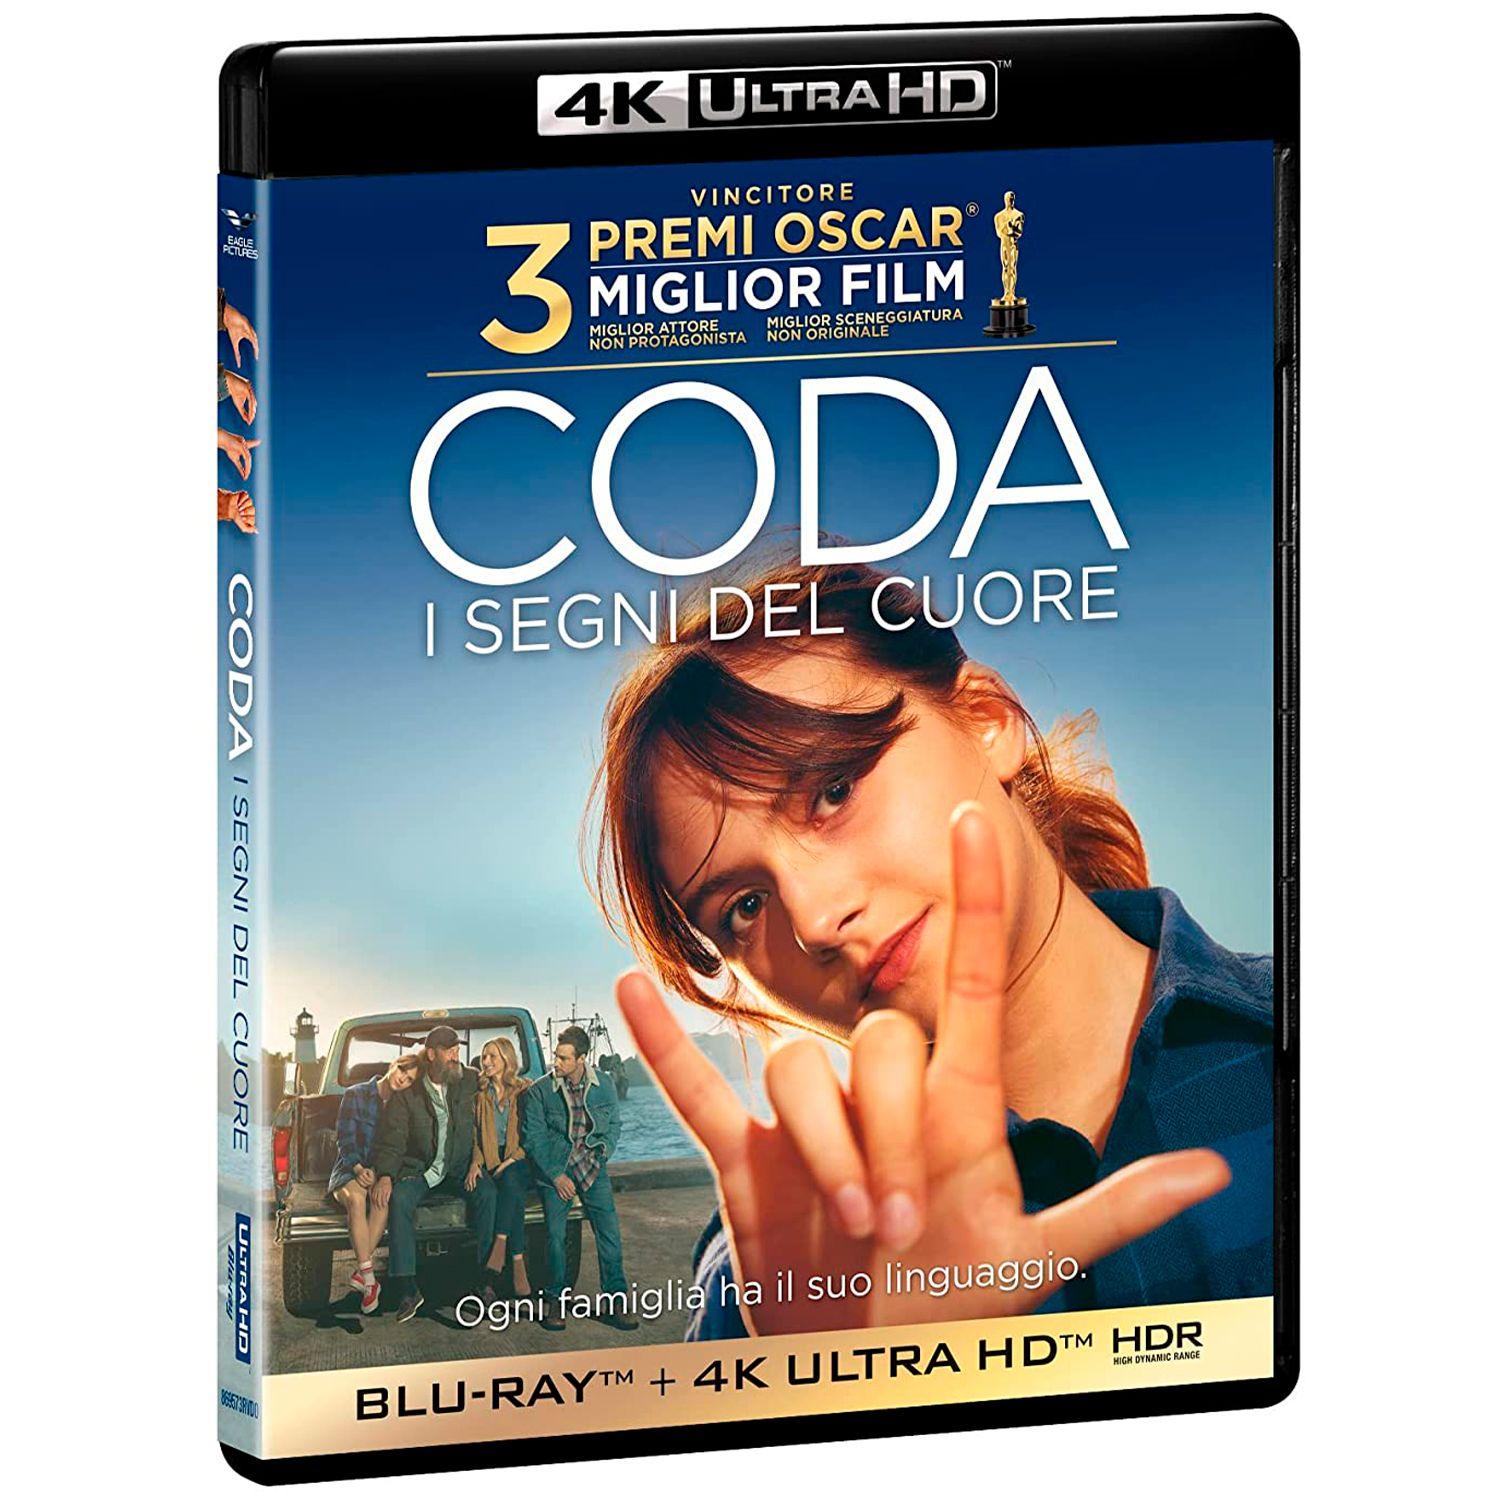 CODA: Ребенок глухих родителей (2021) (англ. язык) (4K UHD + Blu-ray)